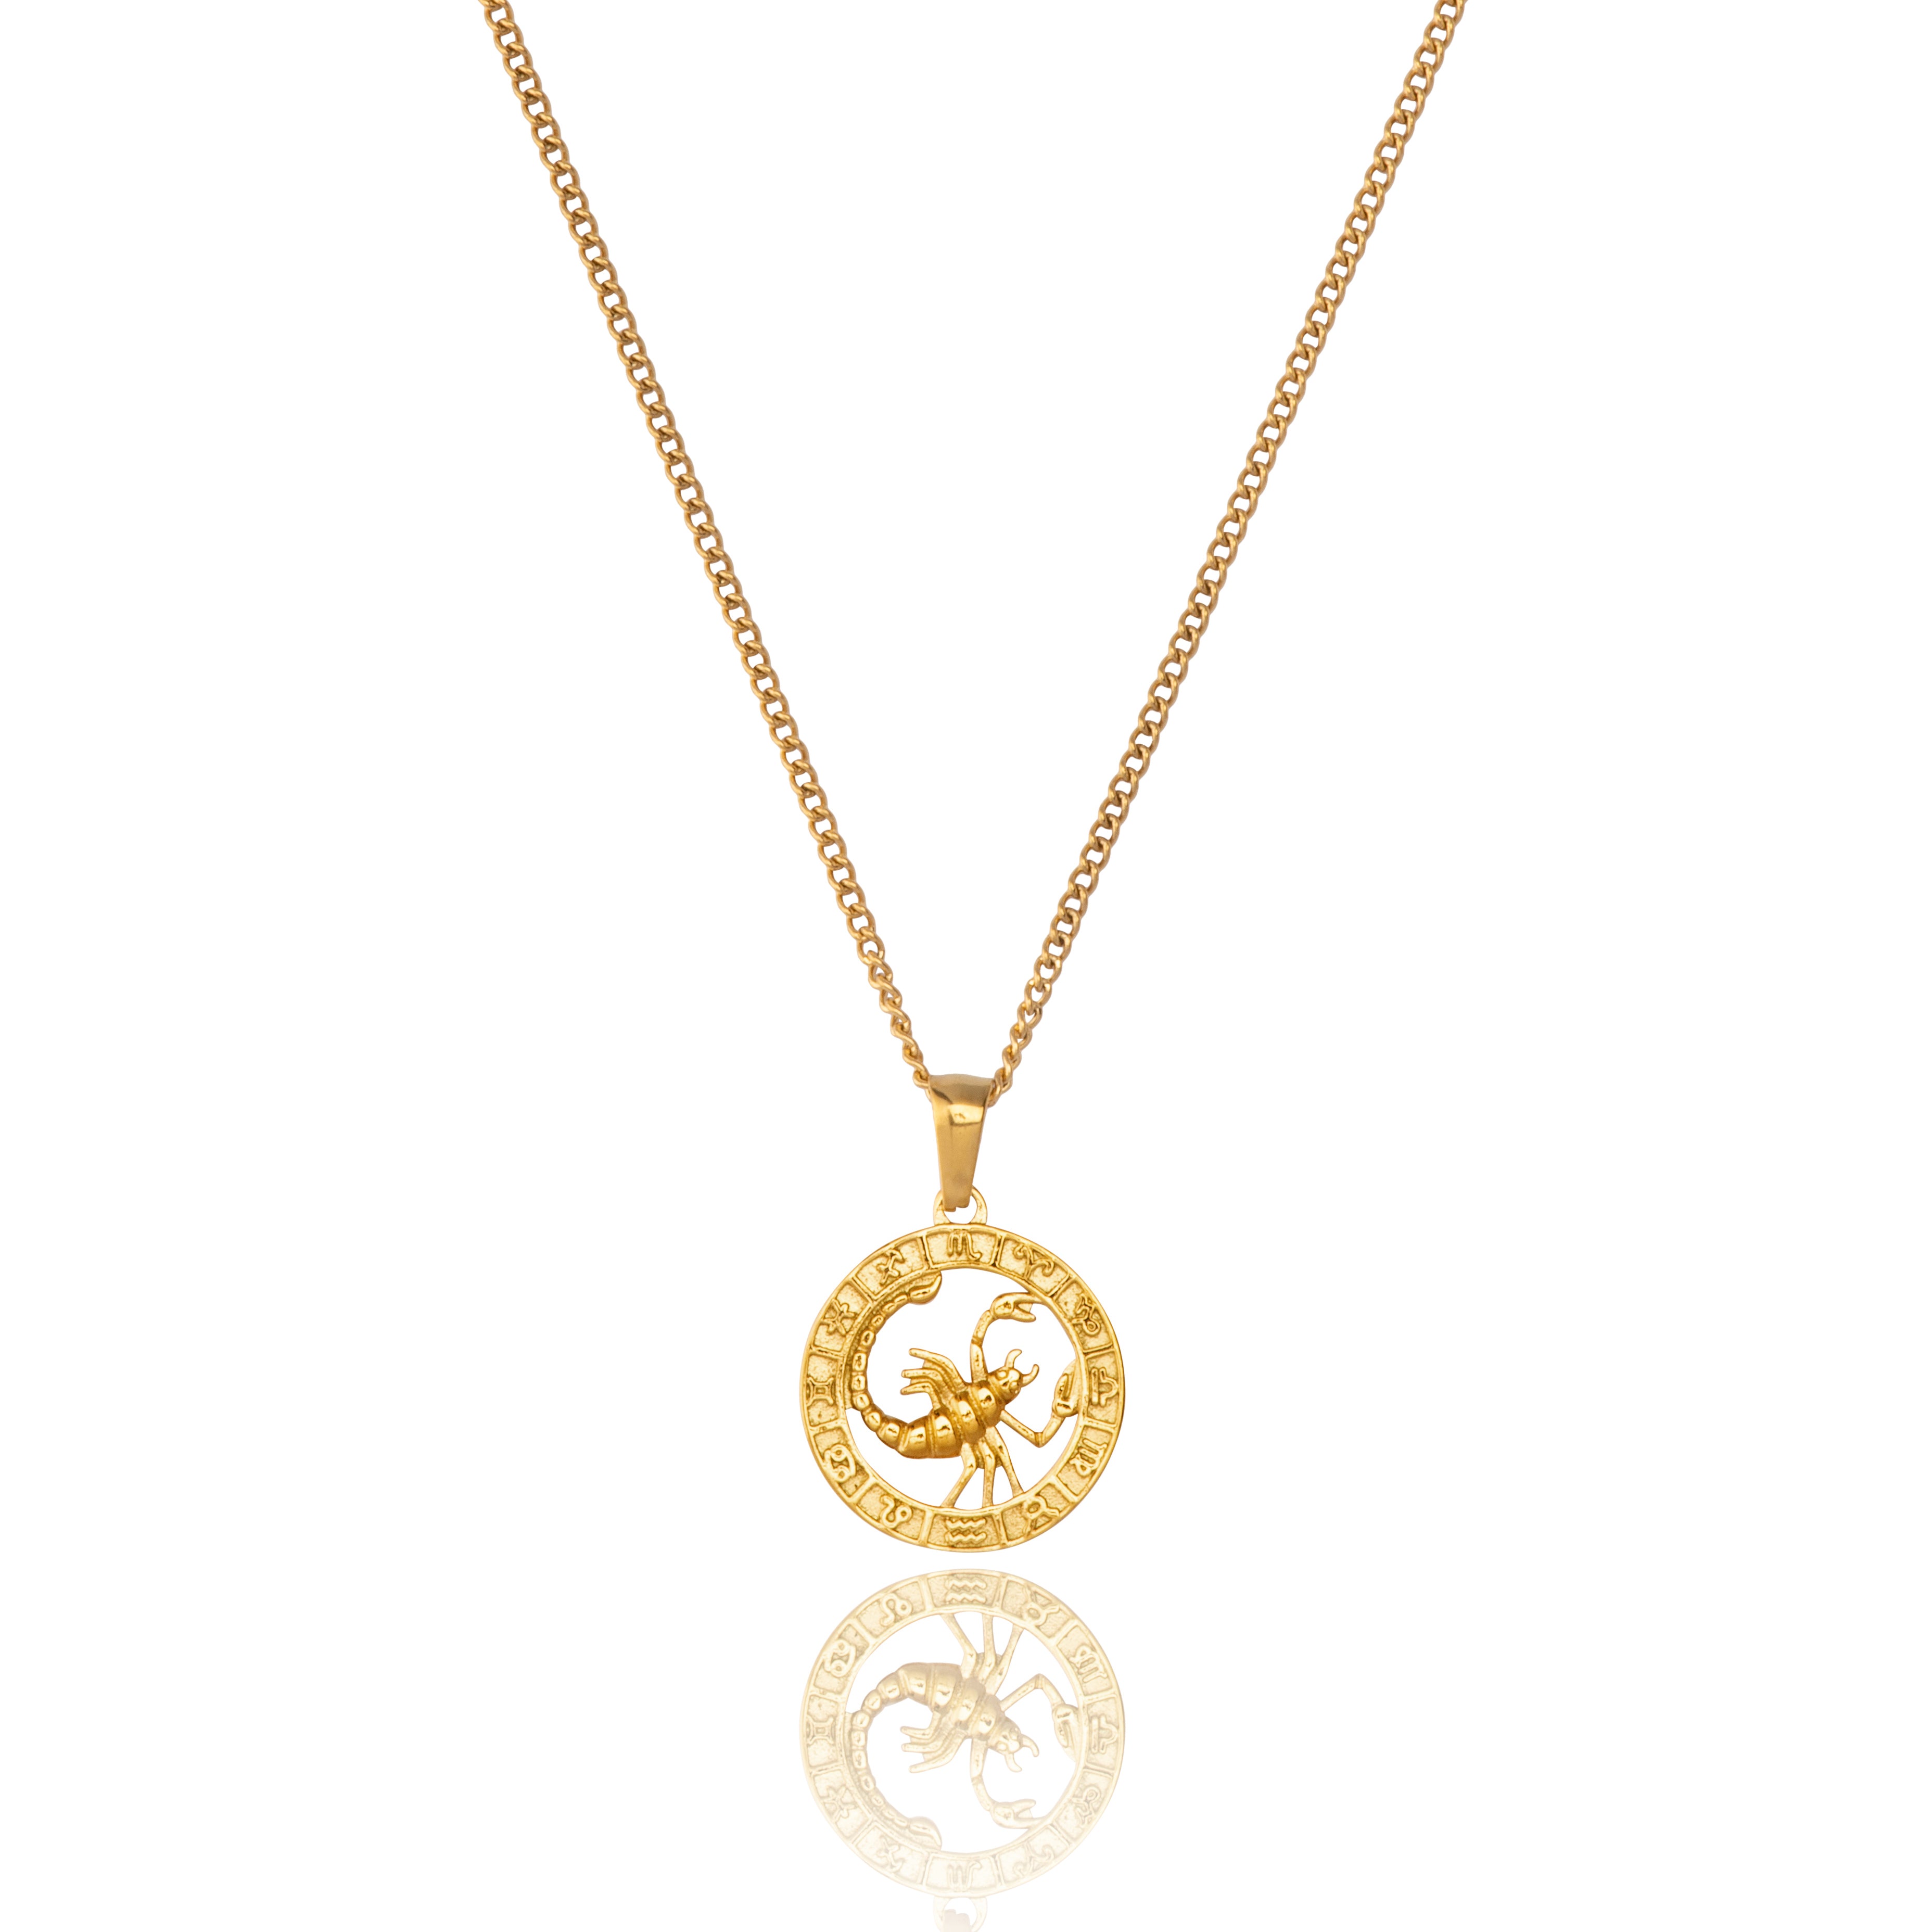 18 K Gold Plated Scorpio Zodiac pendant and chain